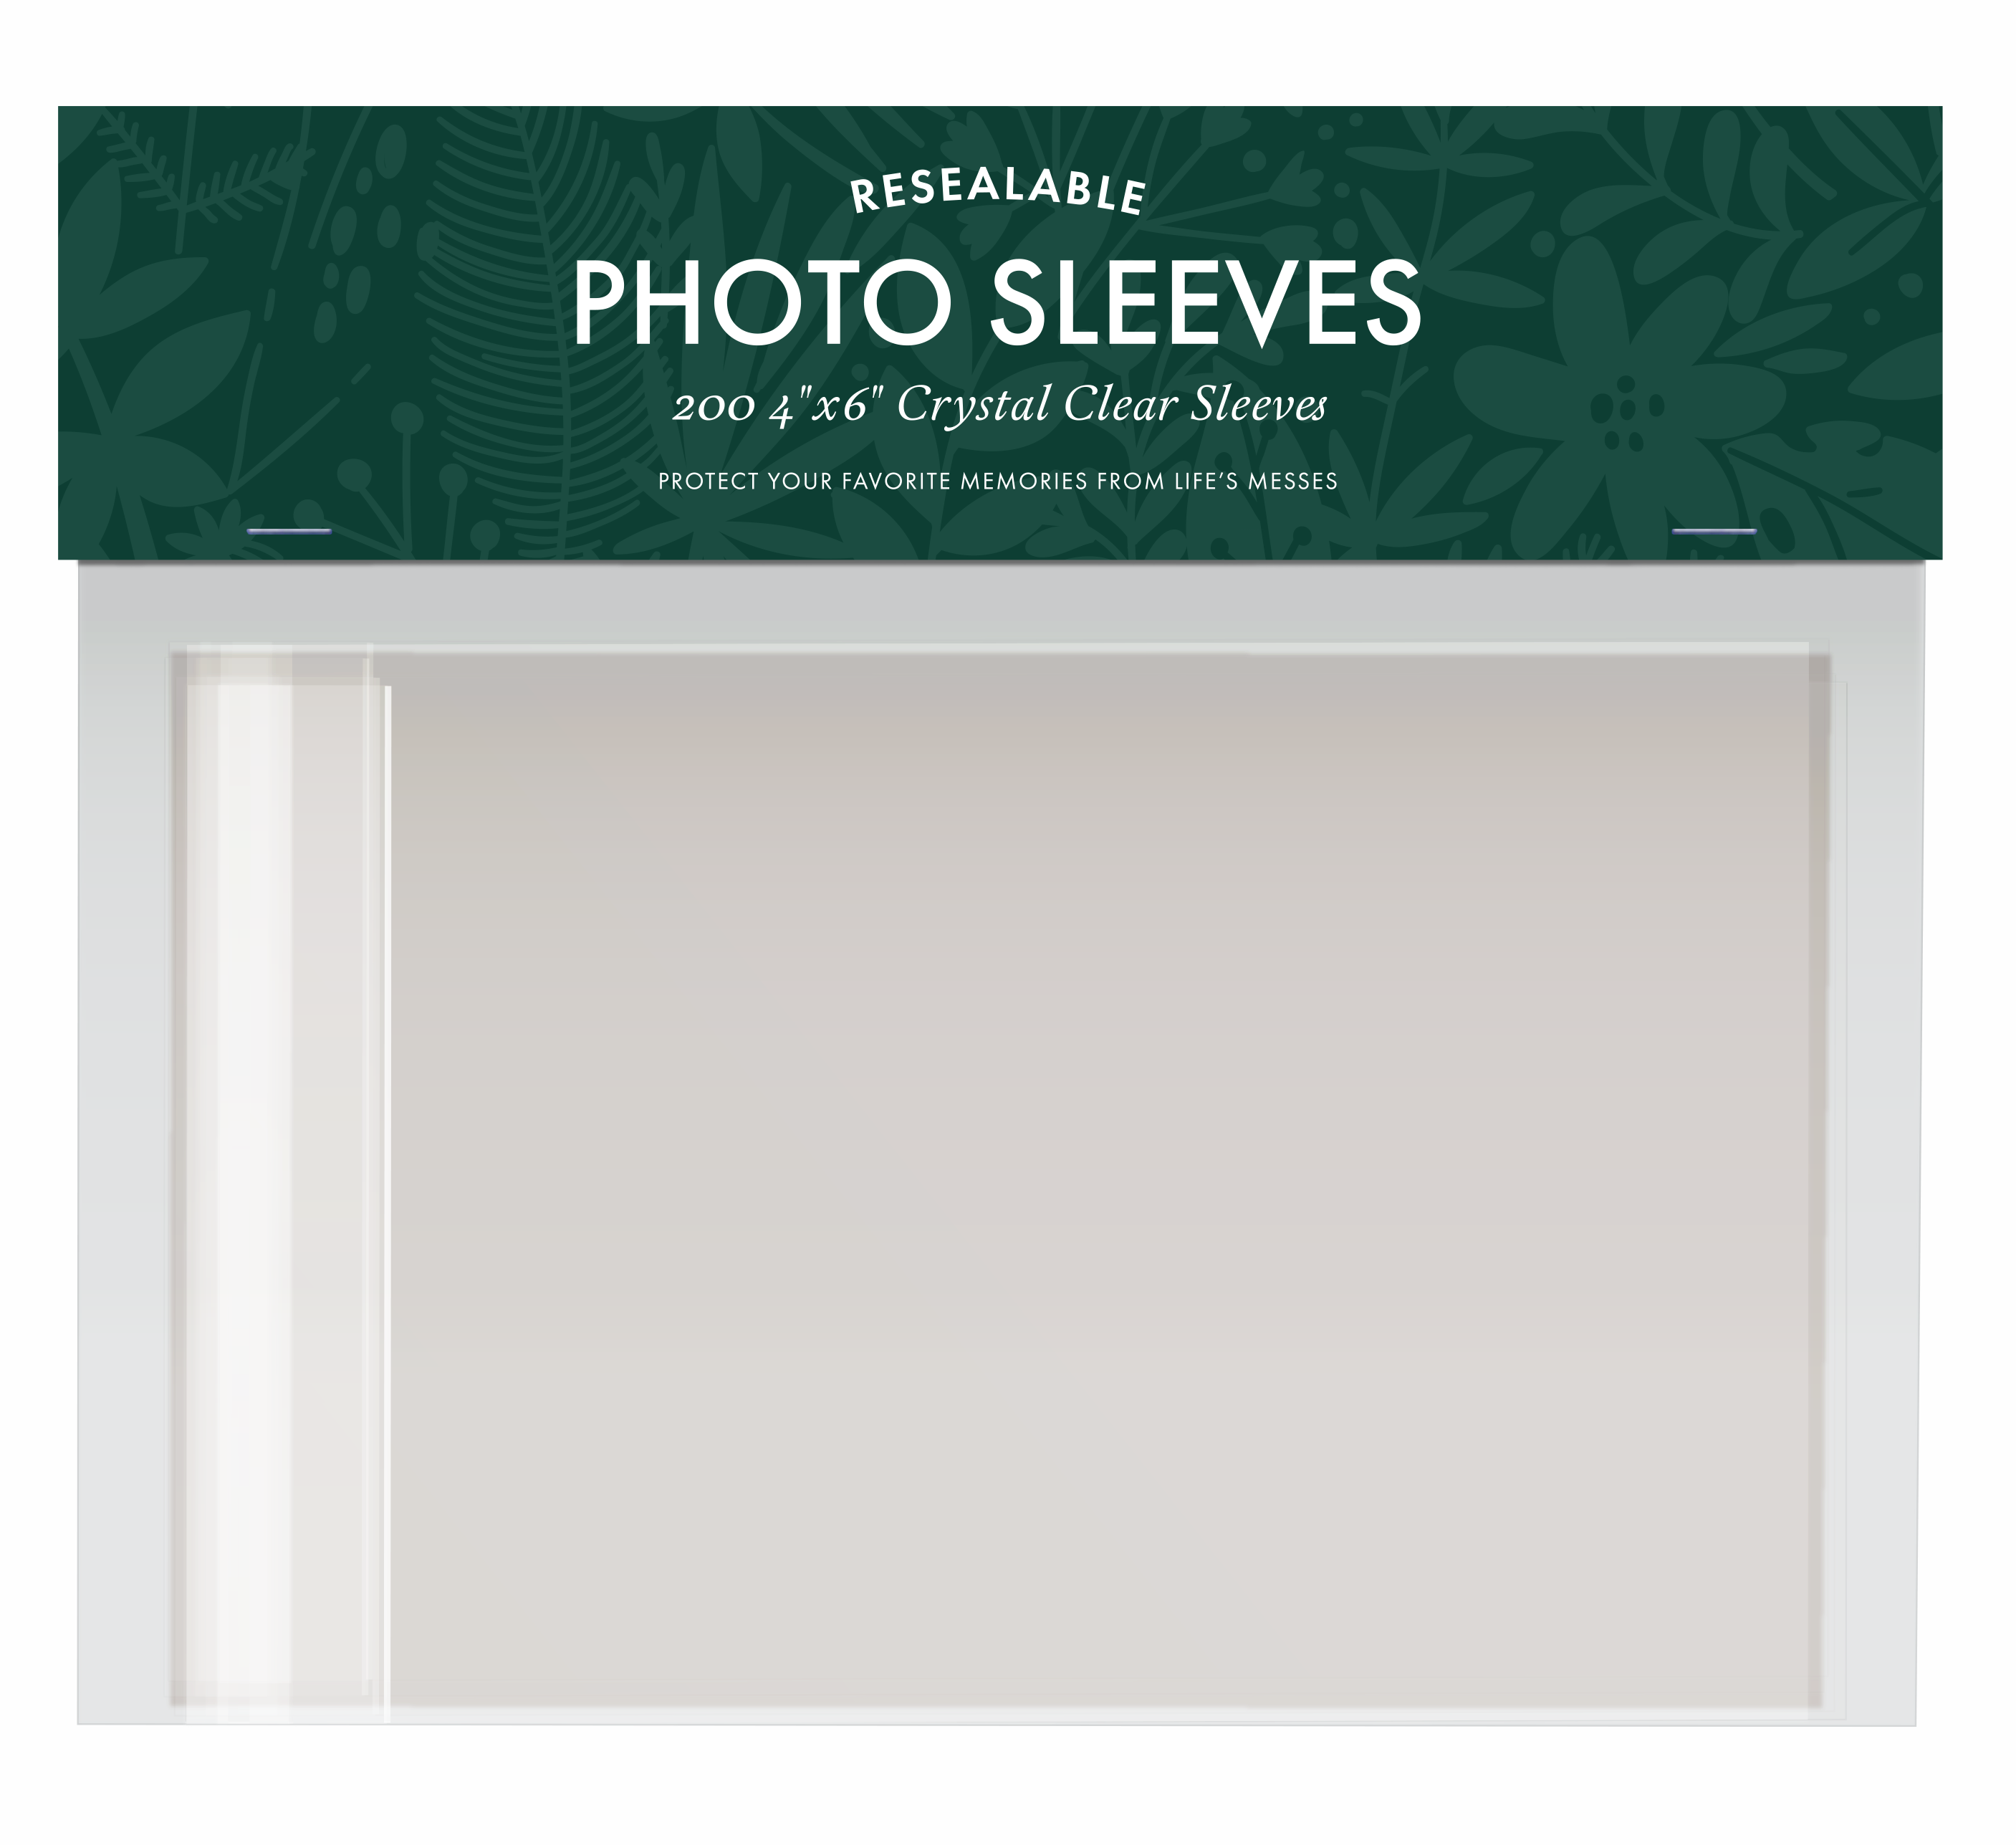 Designer Photo 12x12 Sleeves - 4x6 pockets – Button Farm Club